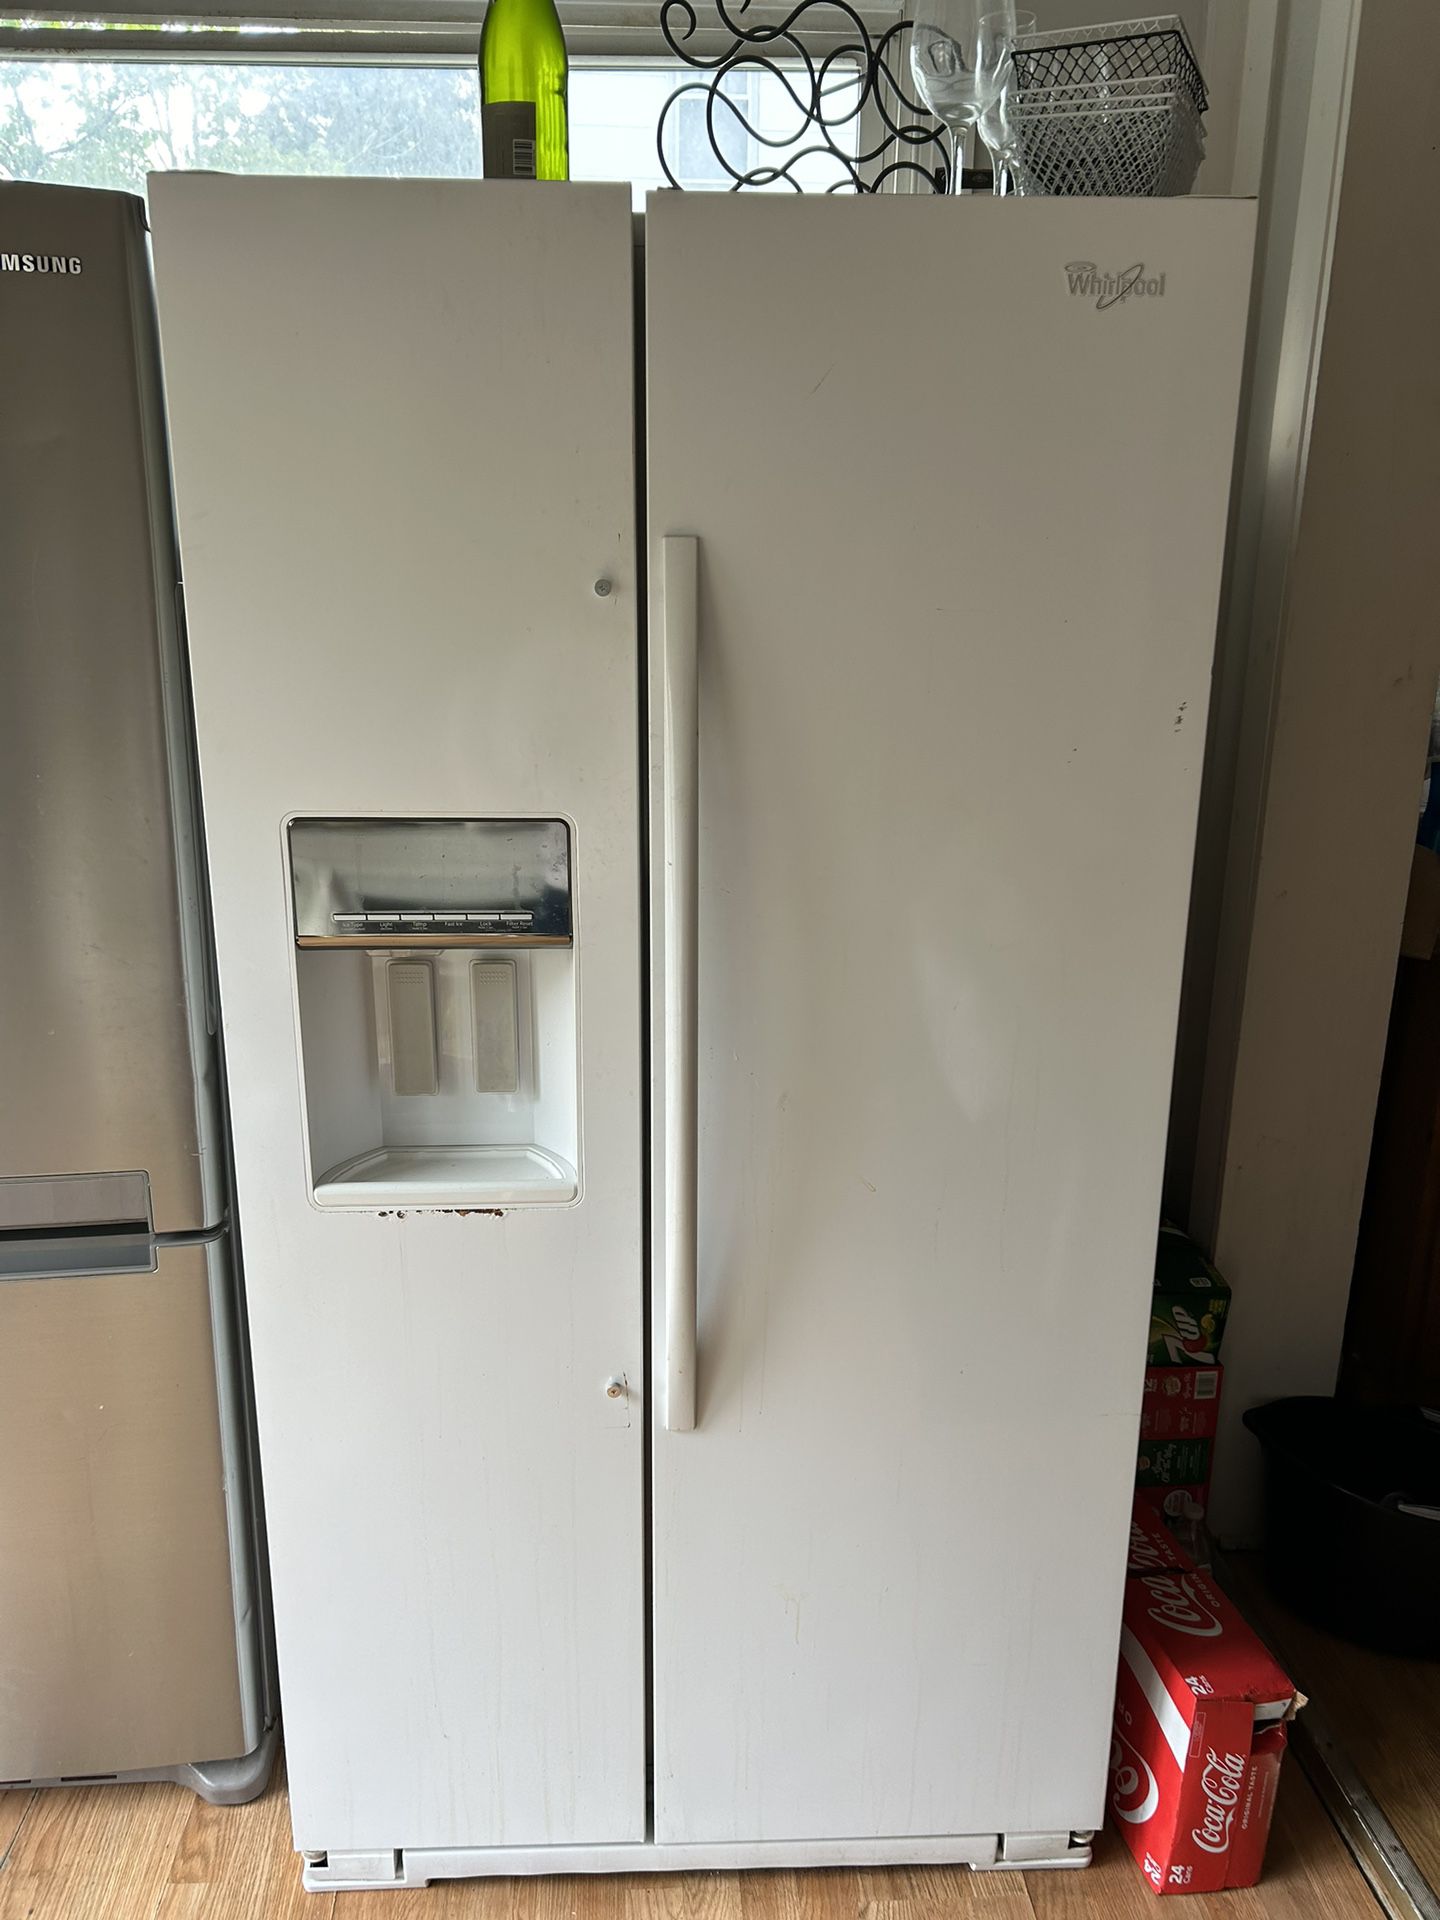 LG Double Oven, Above LG Microwave, Whirlpool Double Door Frige & Freezer